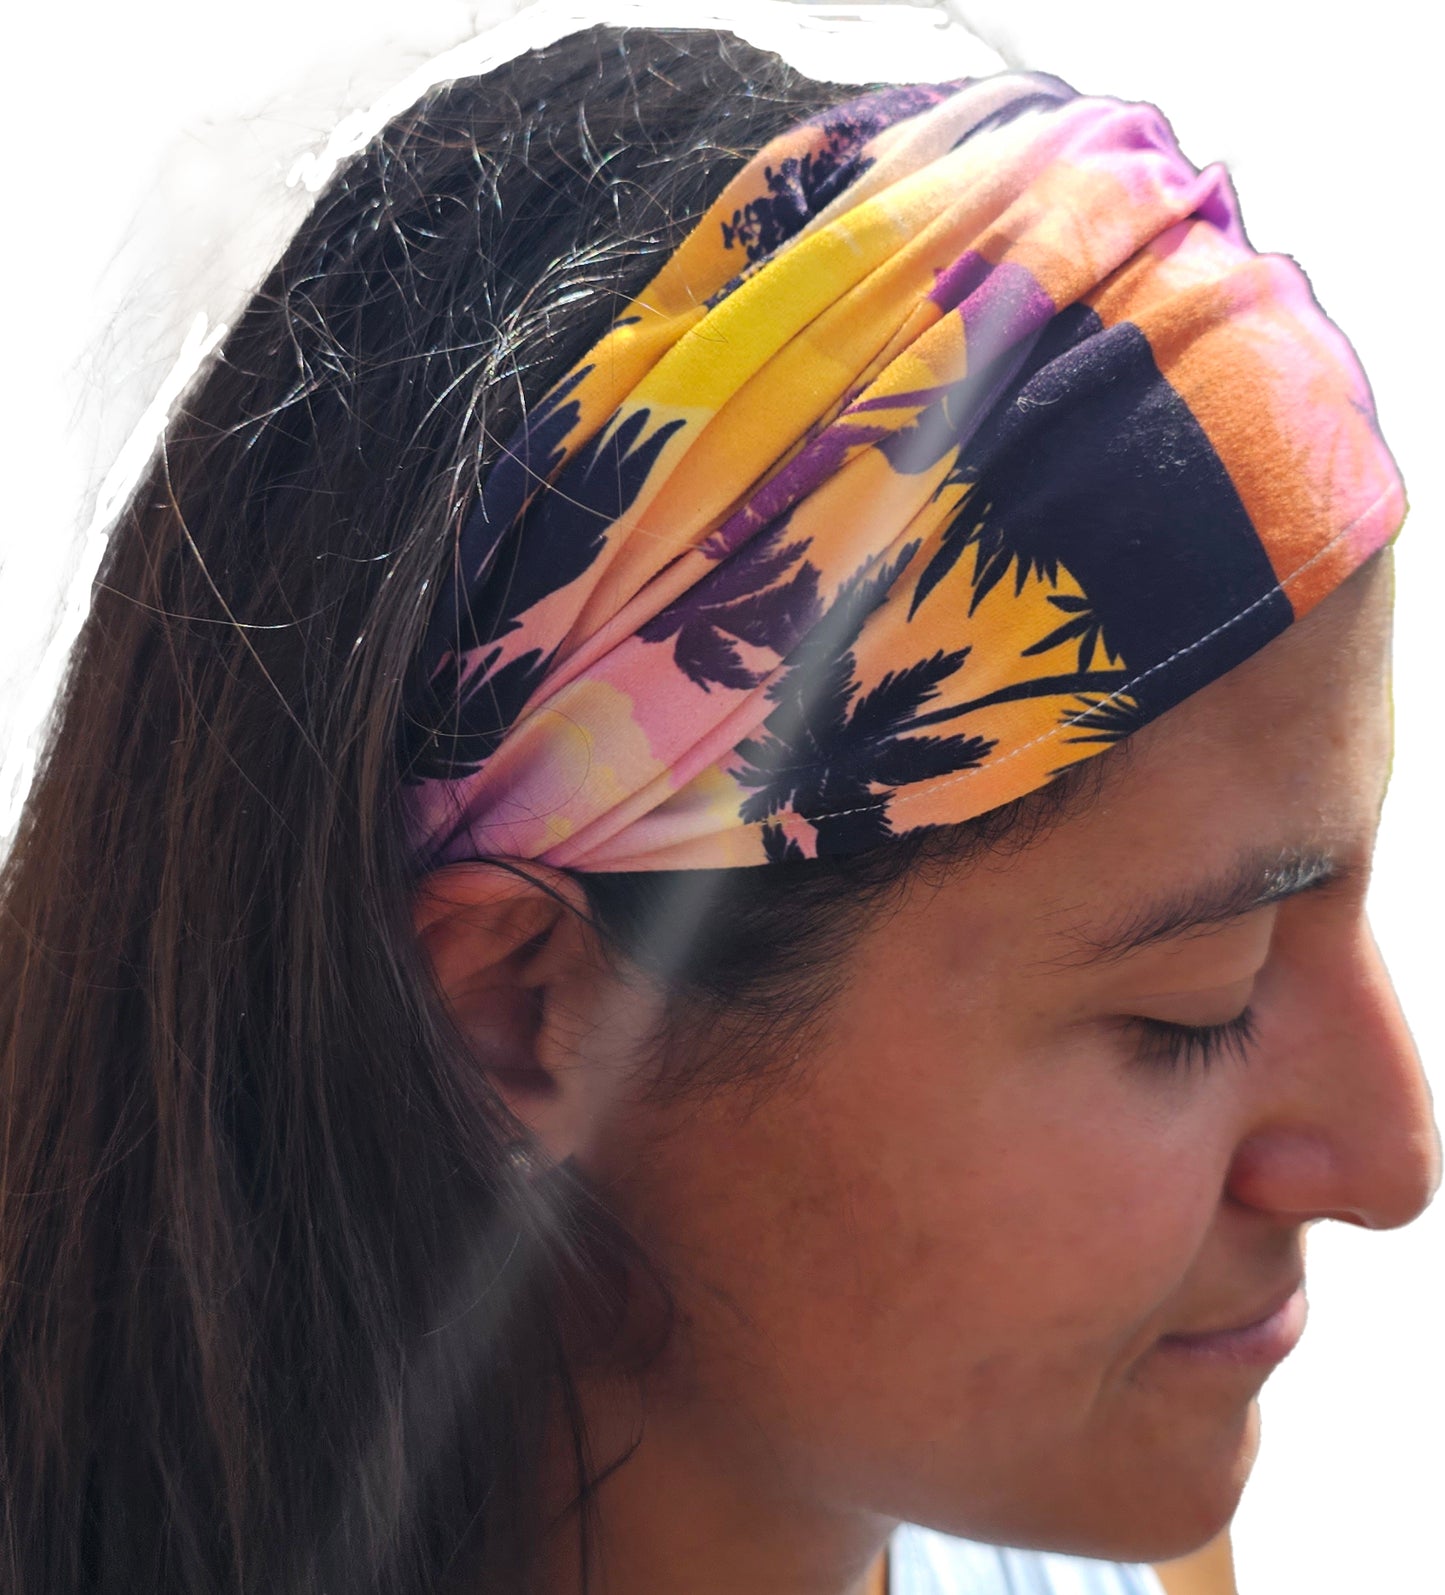 a woman with a colorful Lavender island bandana headband head wrap on her head